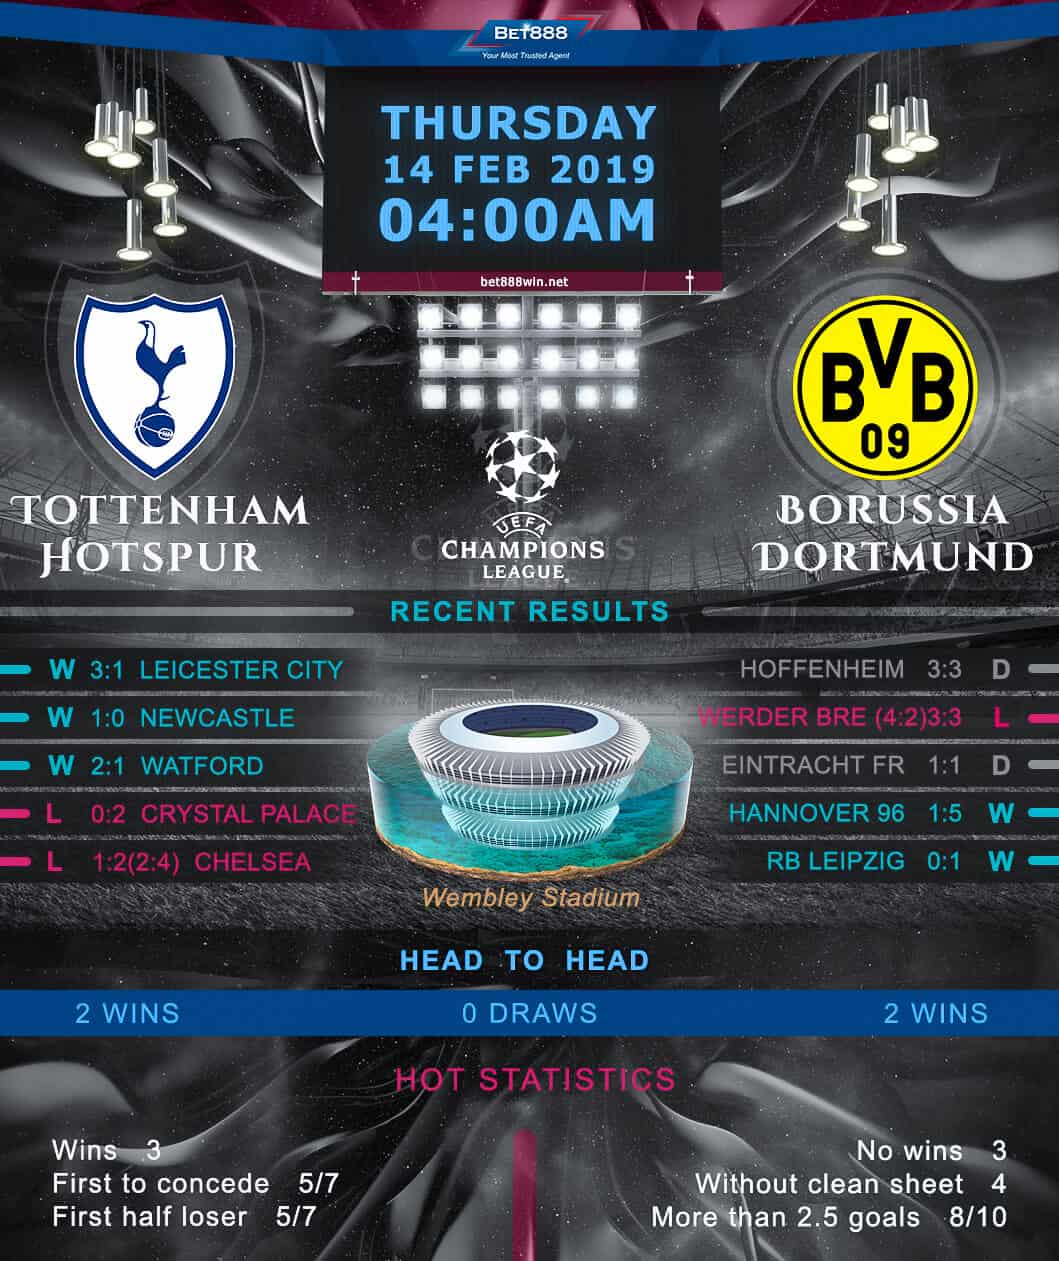 Tottenham Hotspur vs Borussia Dortmund 14/02/19